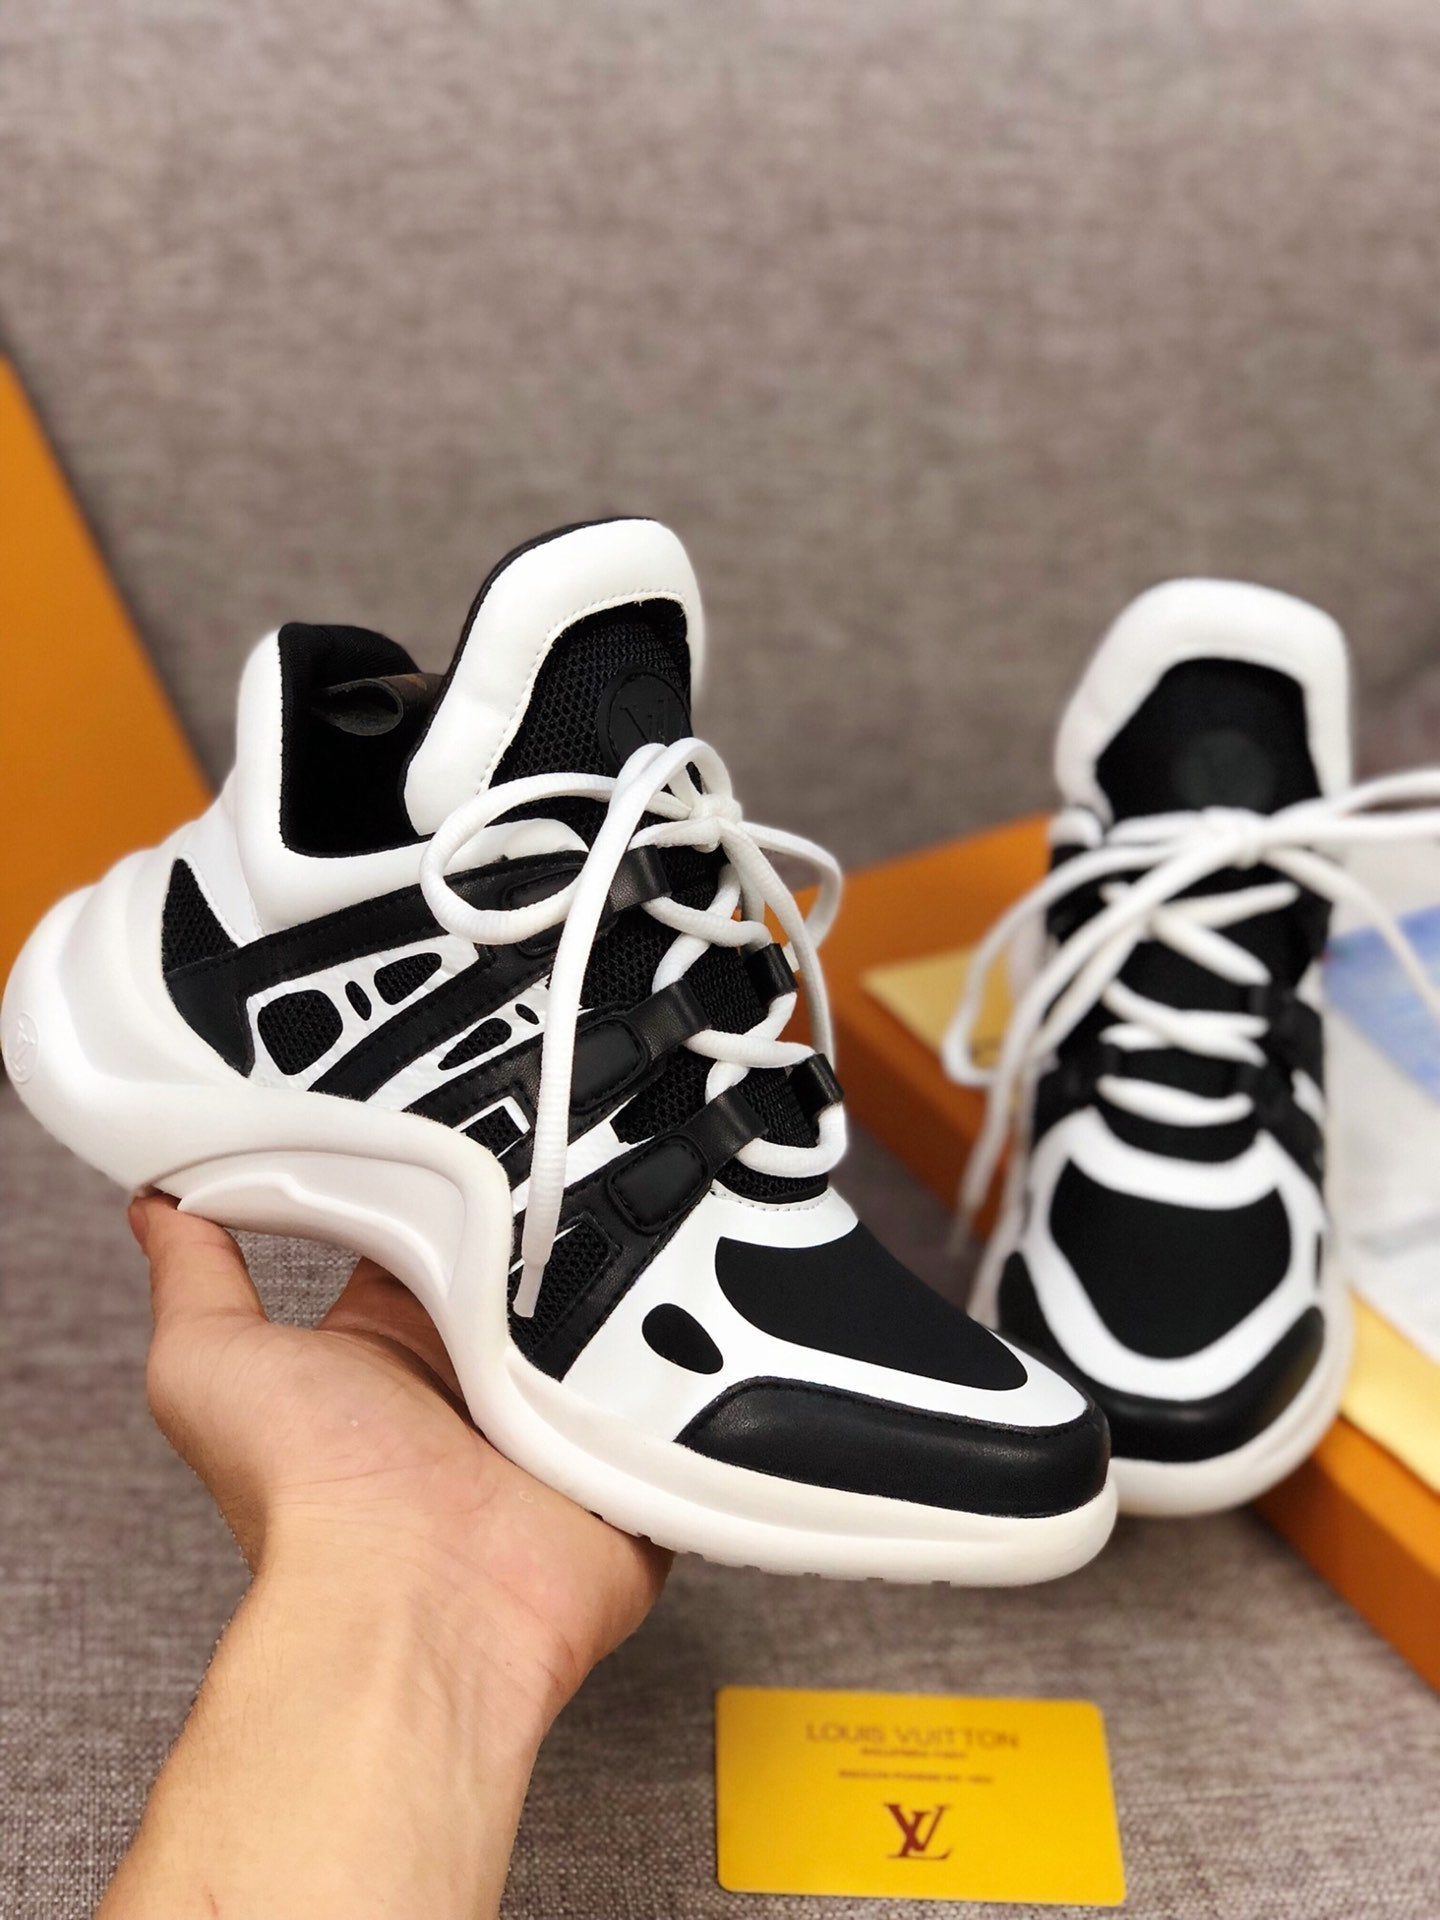 VO - LUV Archlight Black White Sneaker